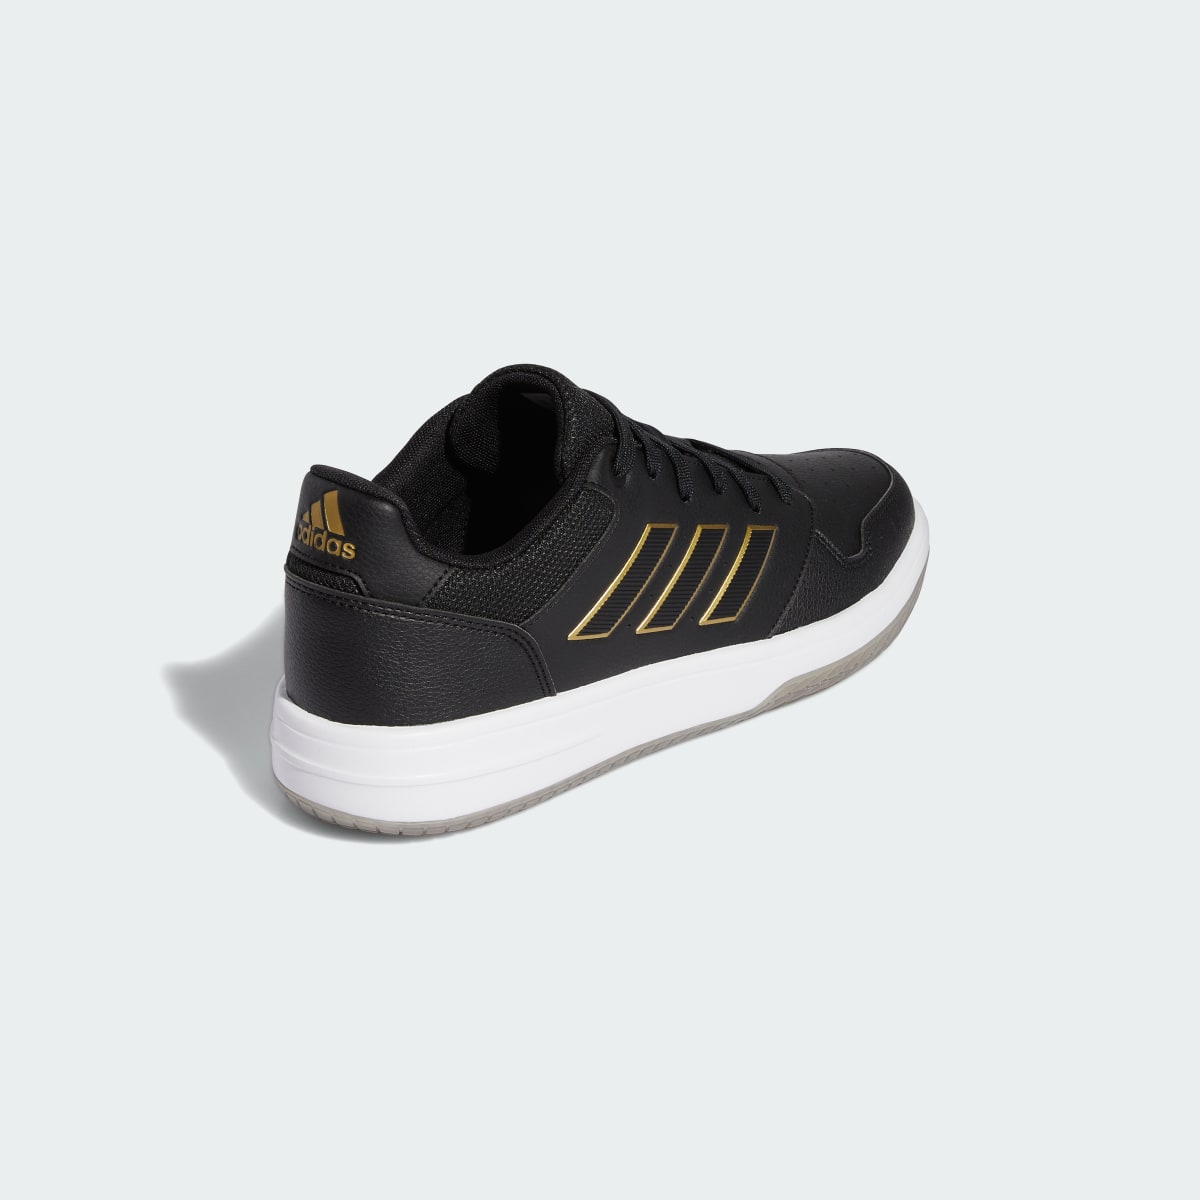 Adidas Gametalker Shoes. 6